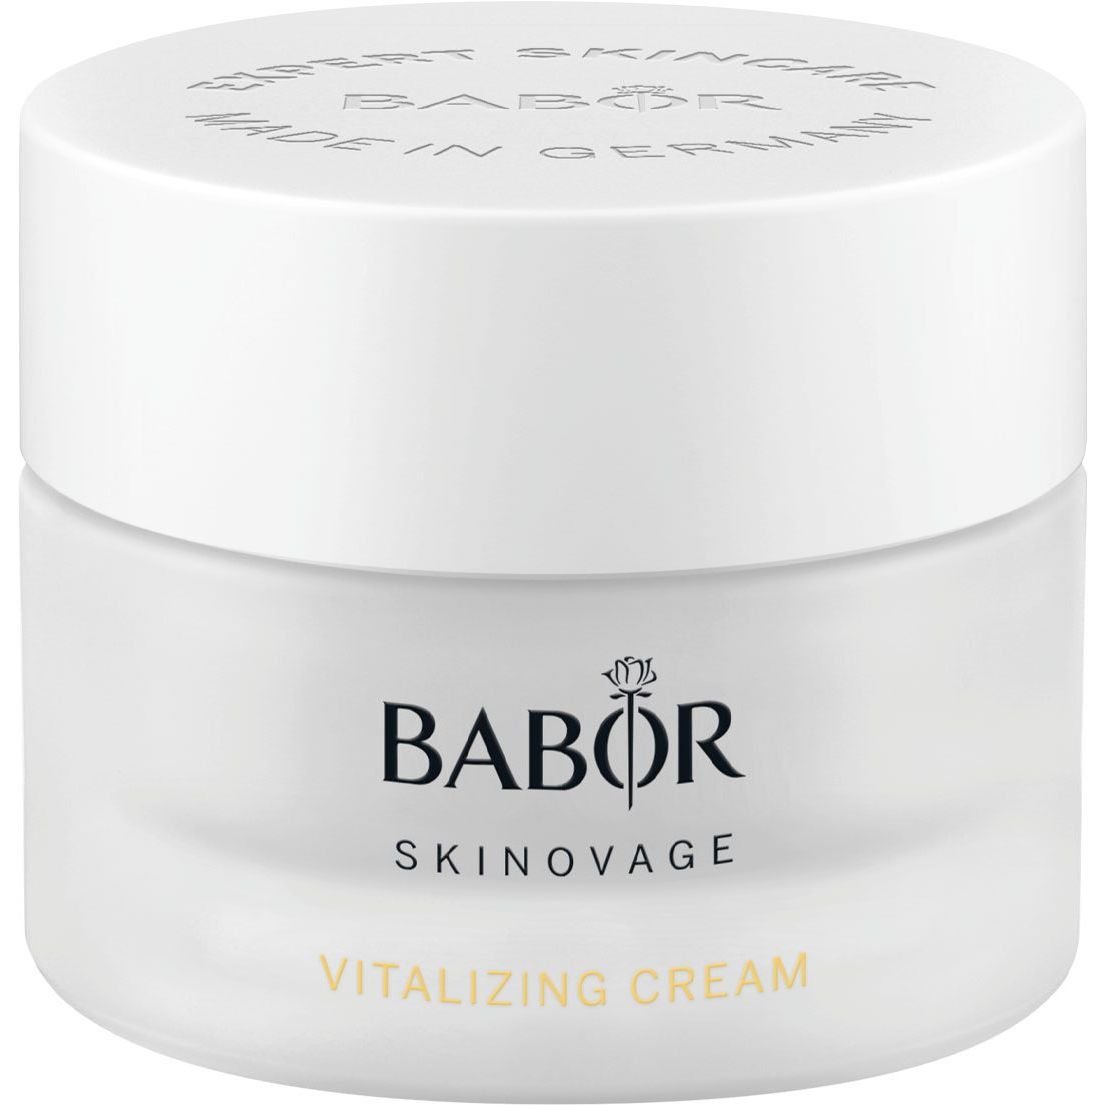 Крем для сияния кожи Babor Skinovage Vitalizing Cream 50 мл - фото 1